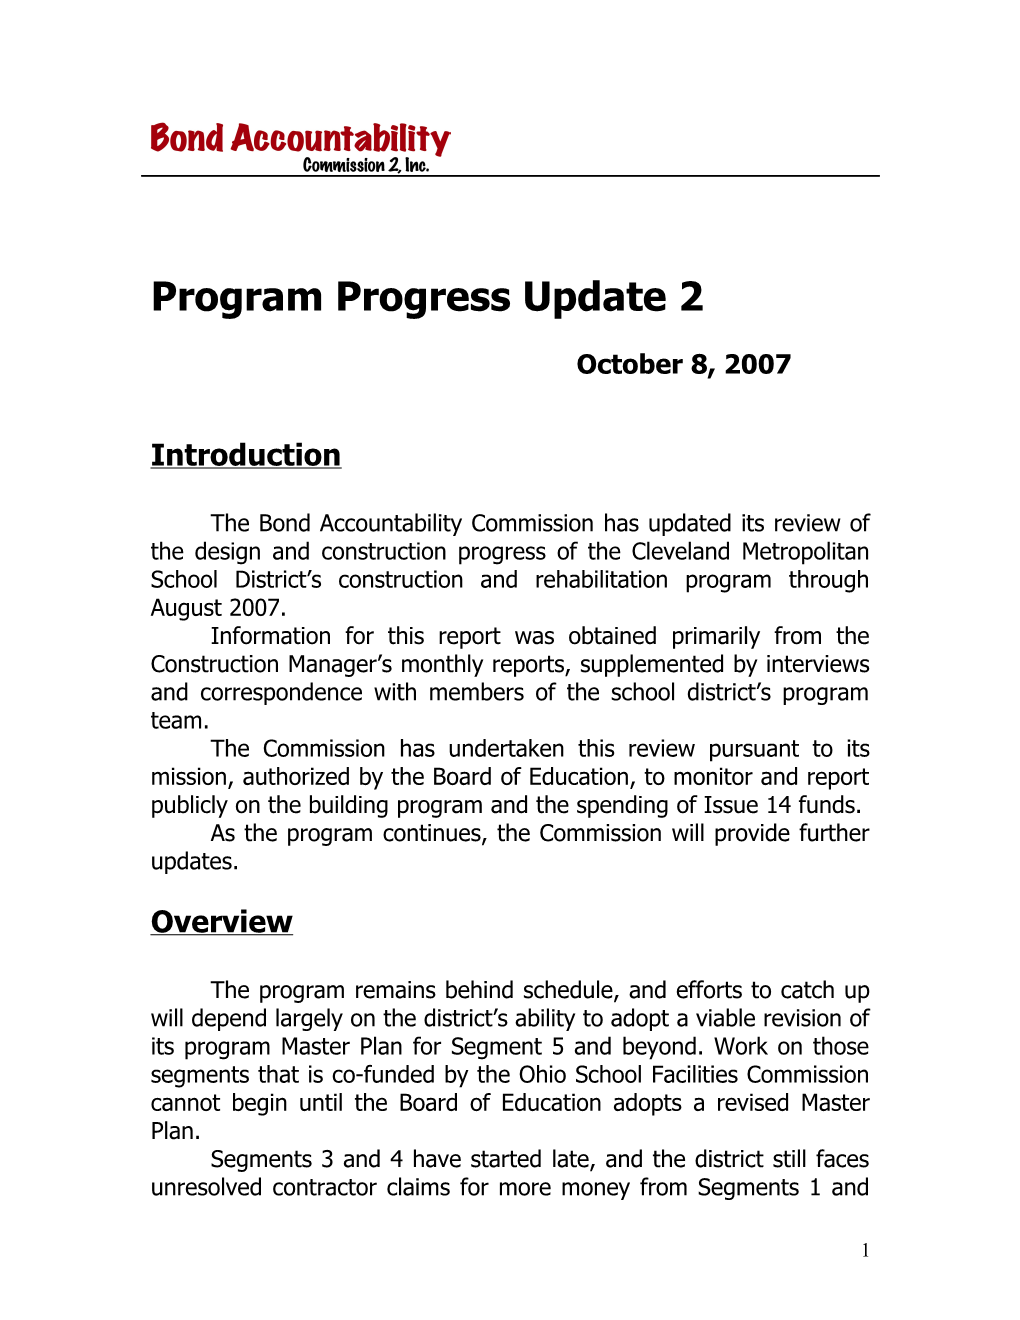 Program Progress Update 2